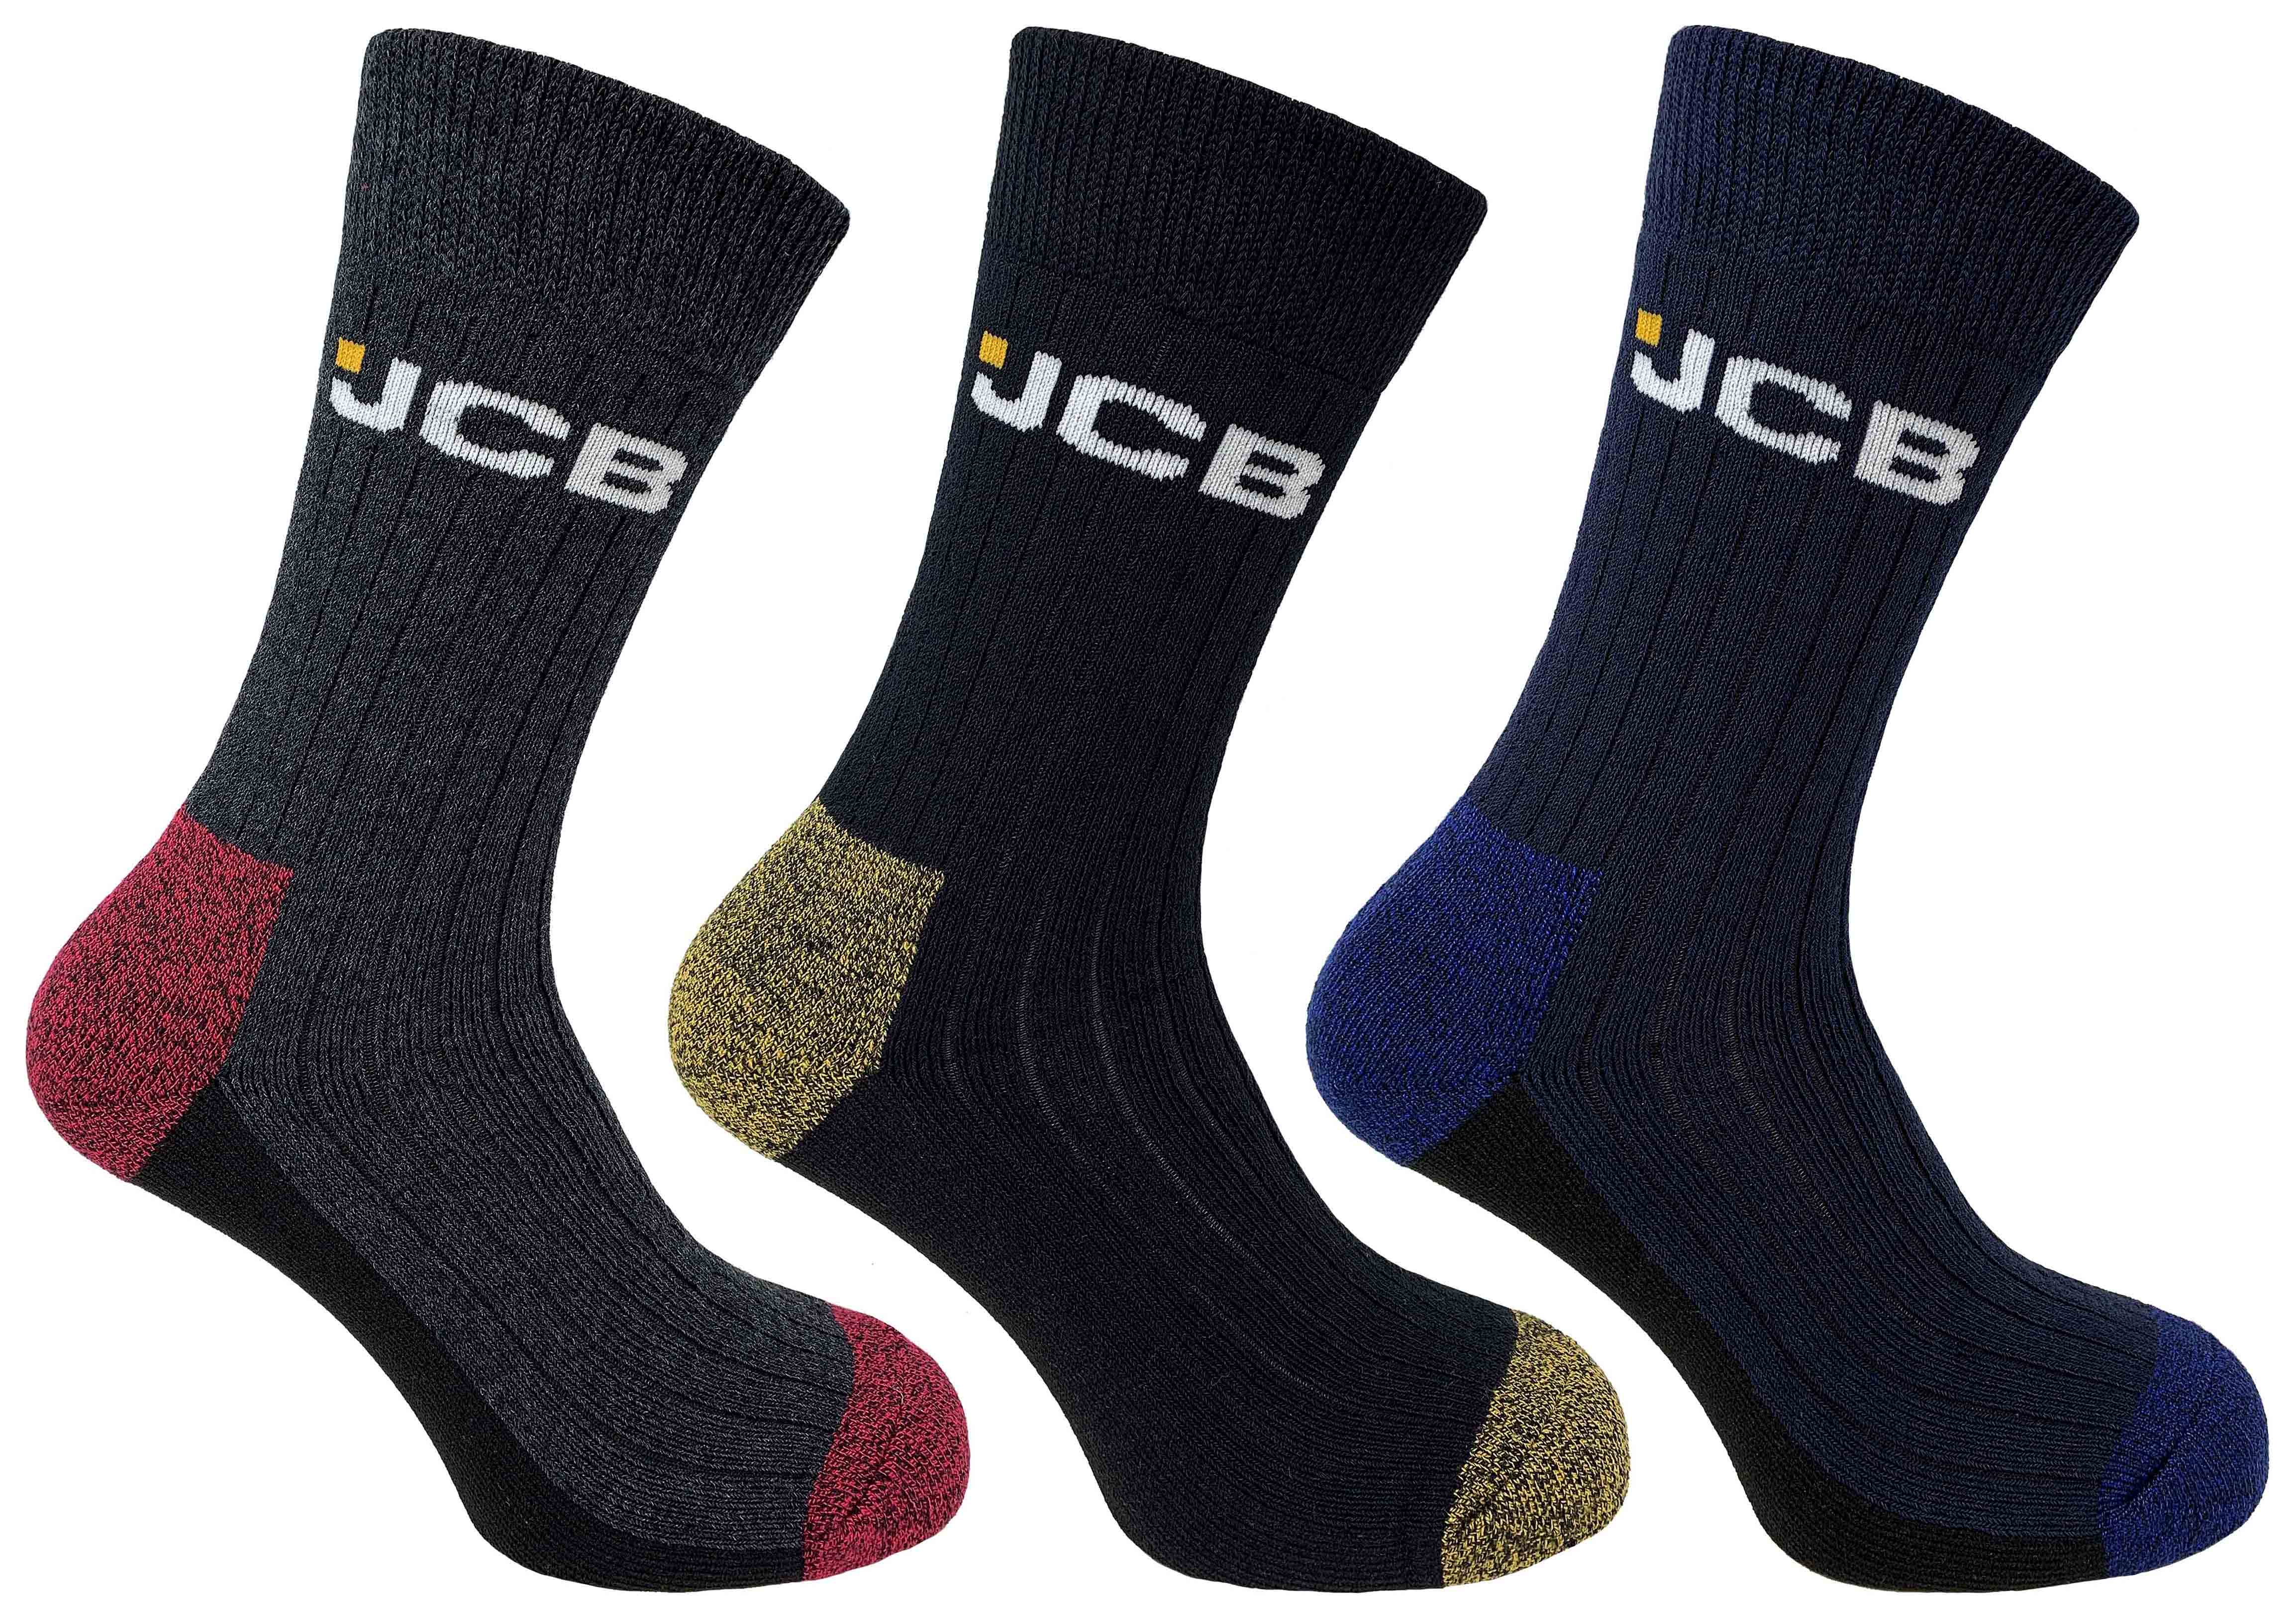 JCB JCBX000083 Boot Socks Pack of 3 Size